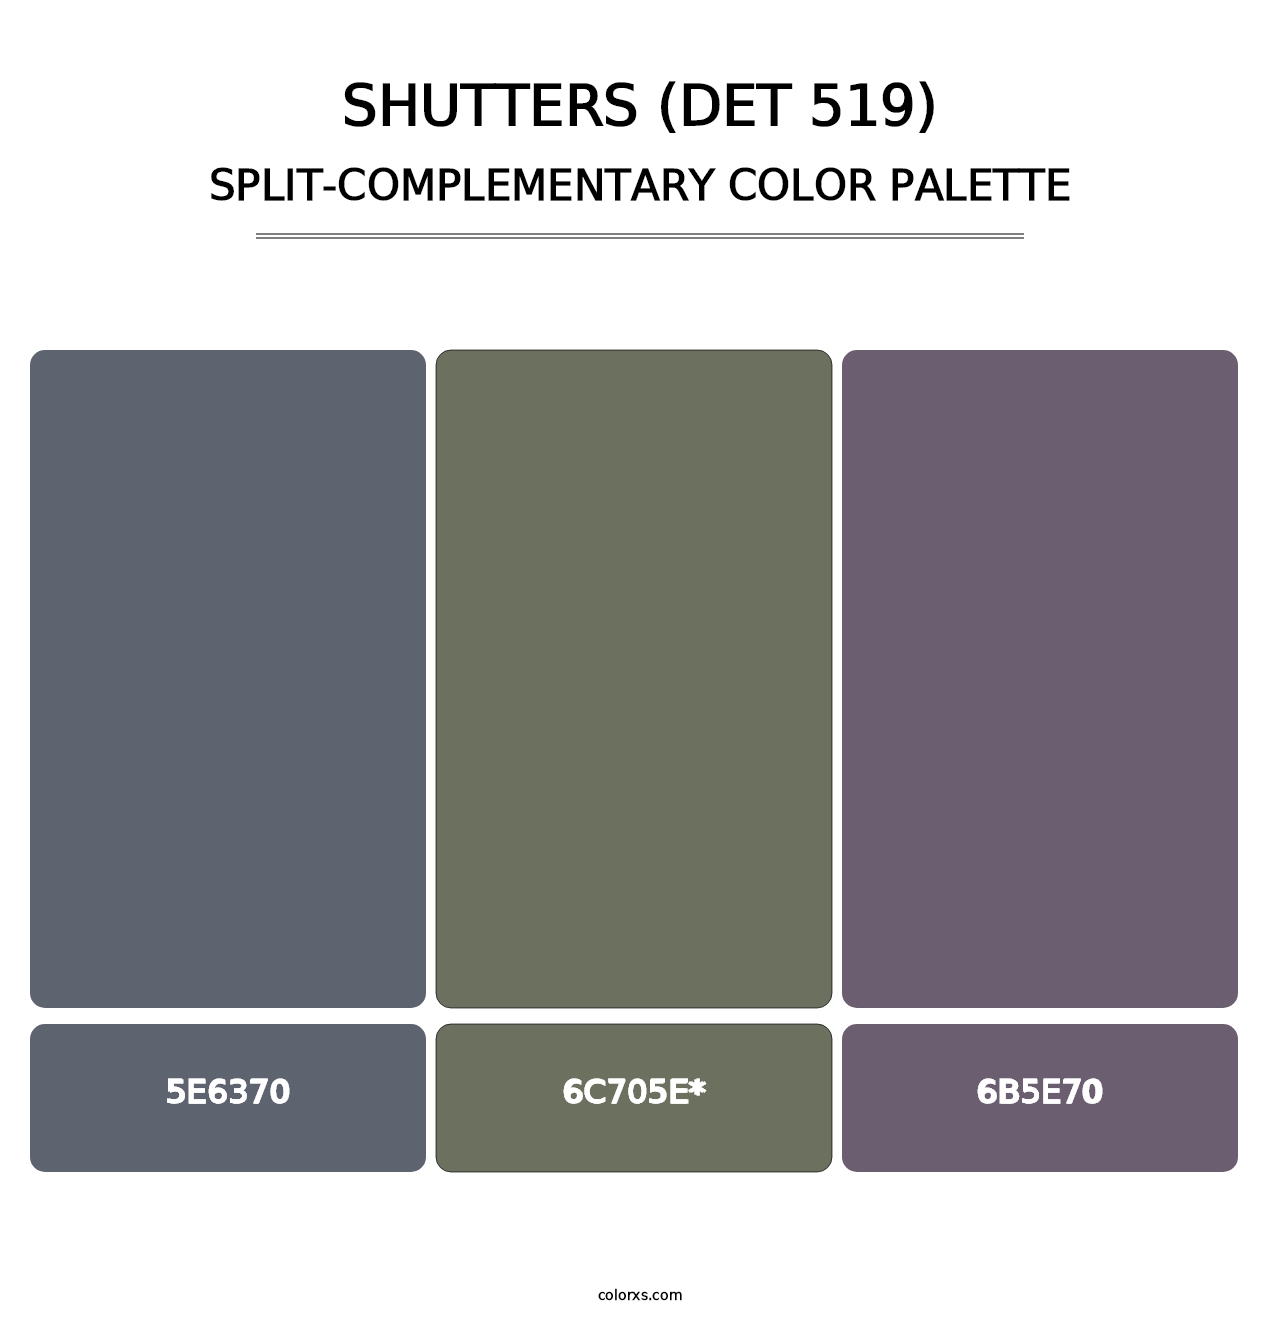 Shutters (DET 519) - Split-Complementary Color Palette